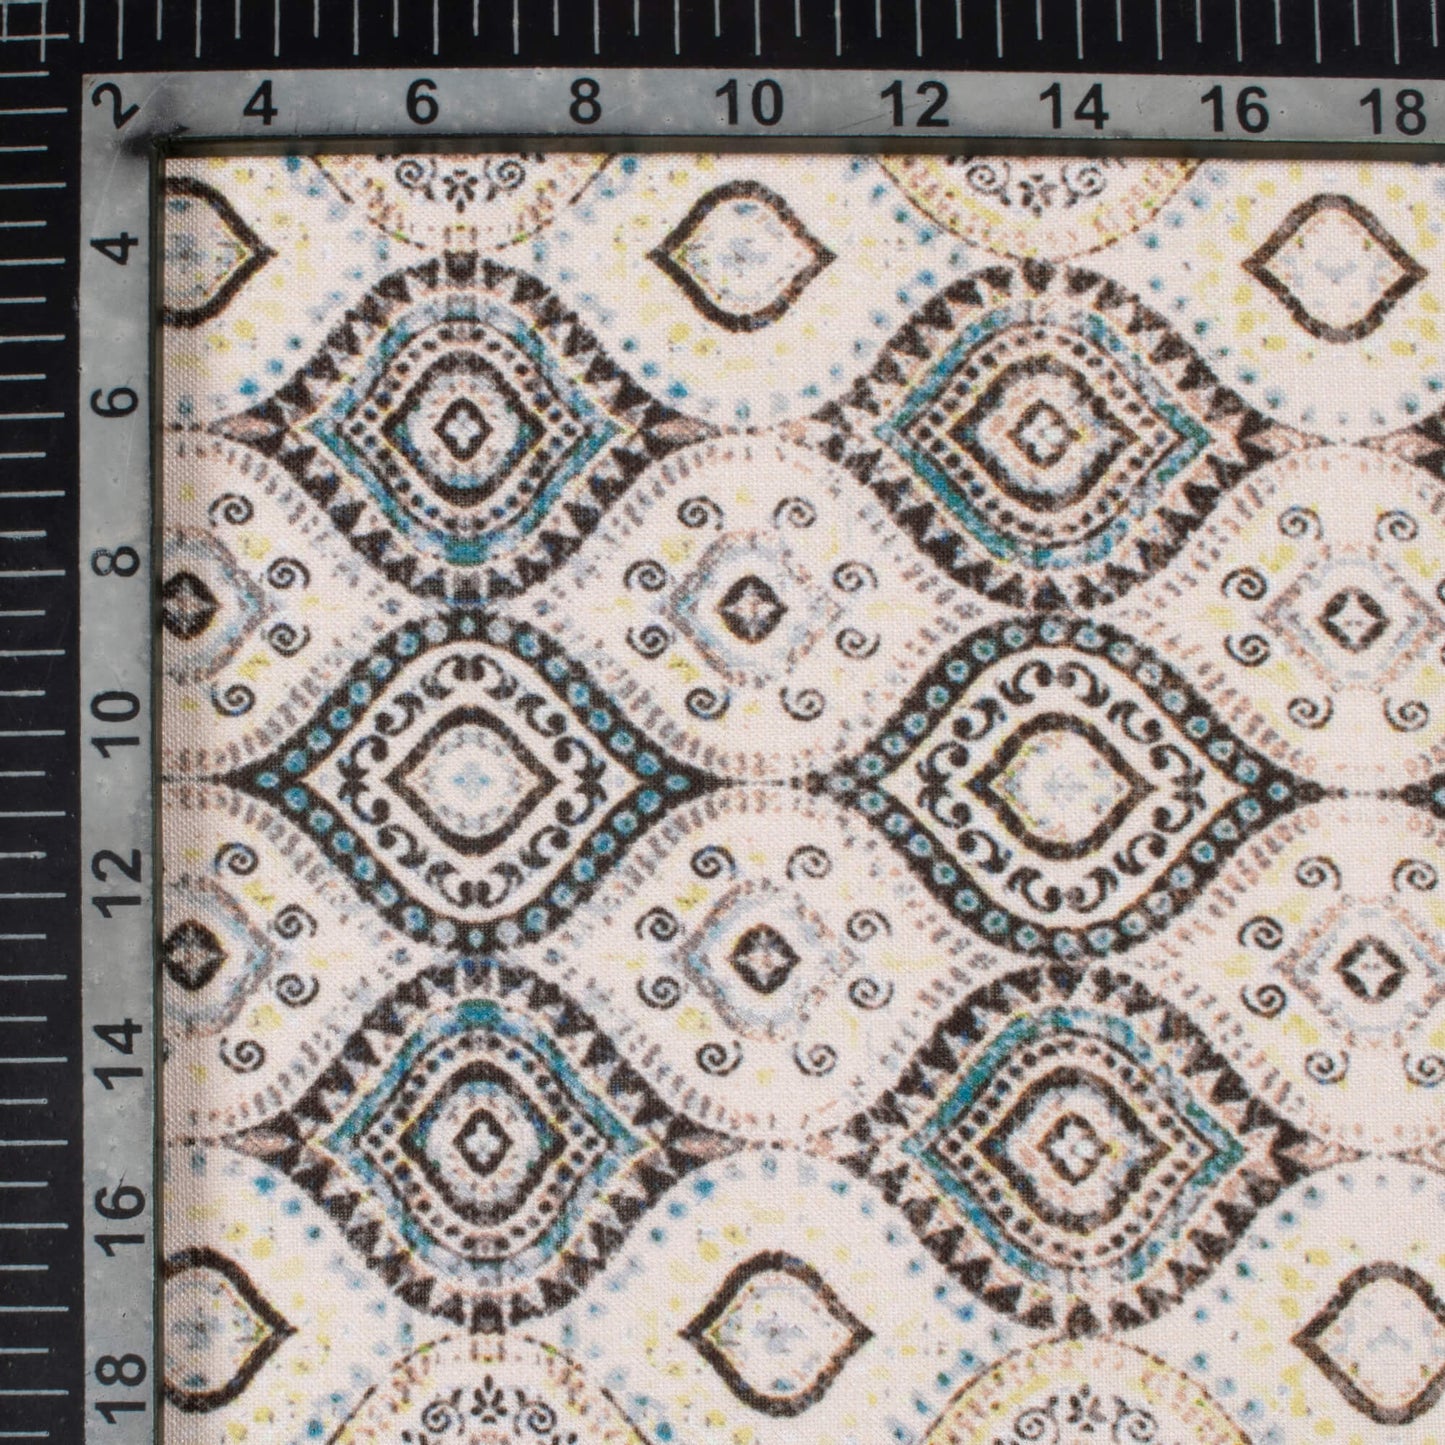 Oat Beige And Black Trellis Pattern Digital Print Linen Textured Fabric (Width 56 Inches)